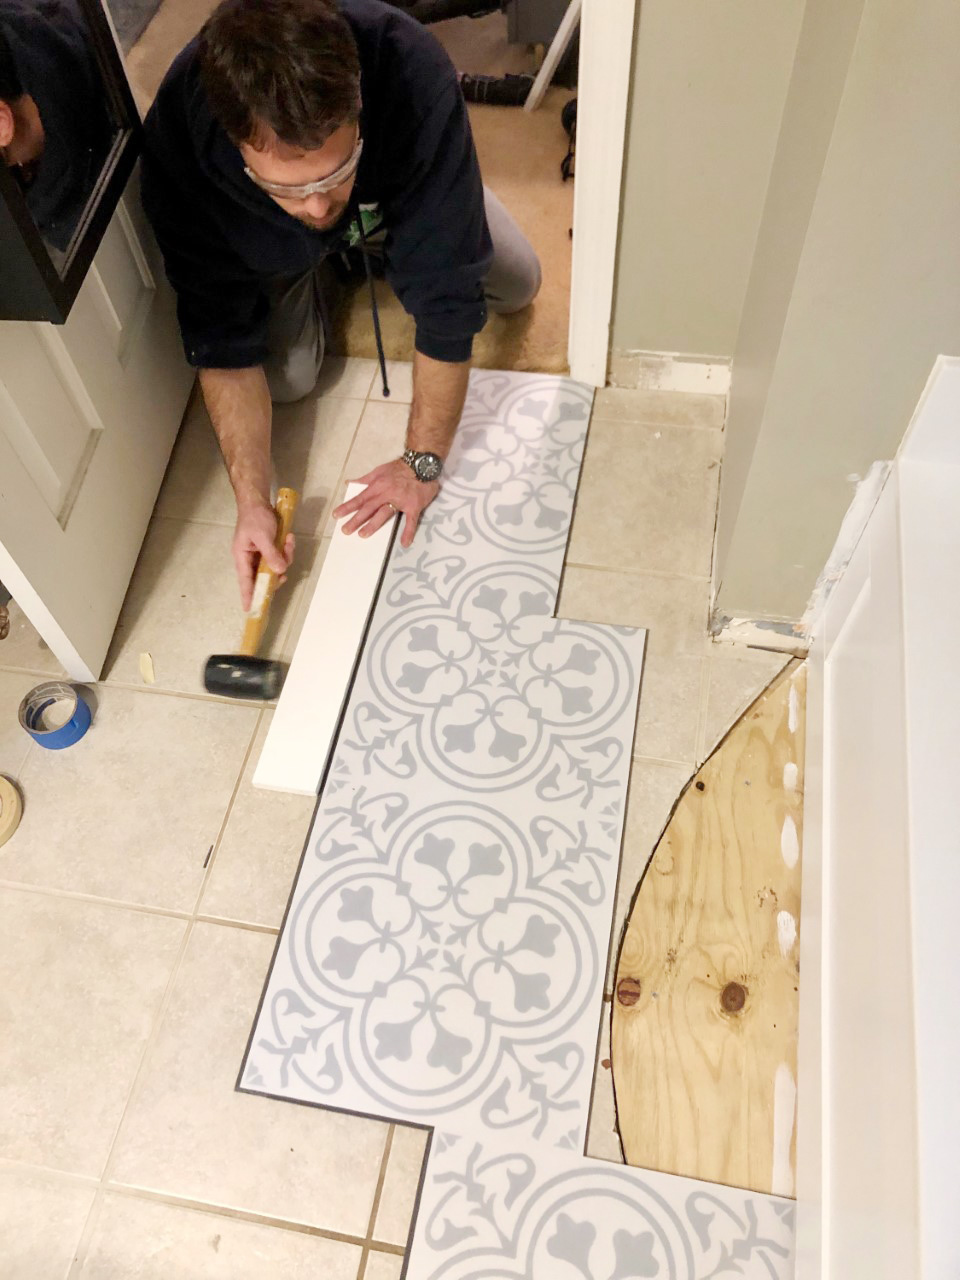 Lvt Flooring Over Existing Tile The, Transition From Tile To Vinyl Flooring